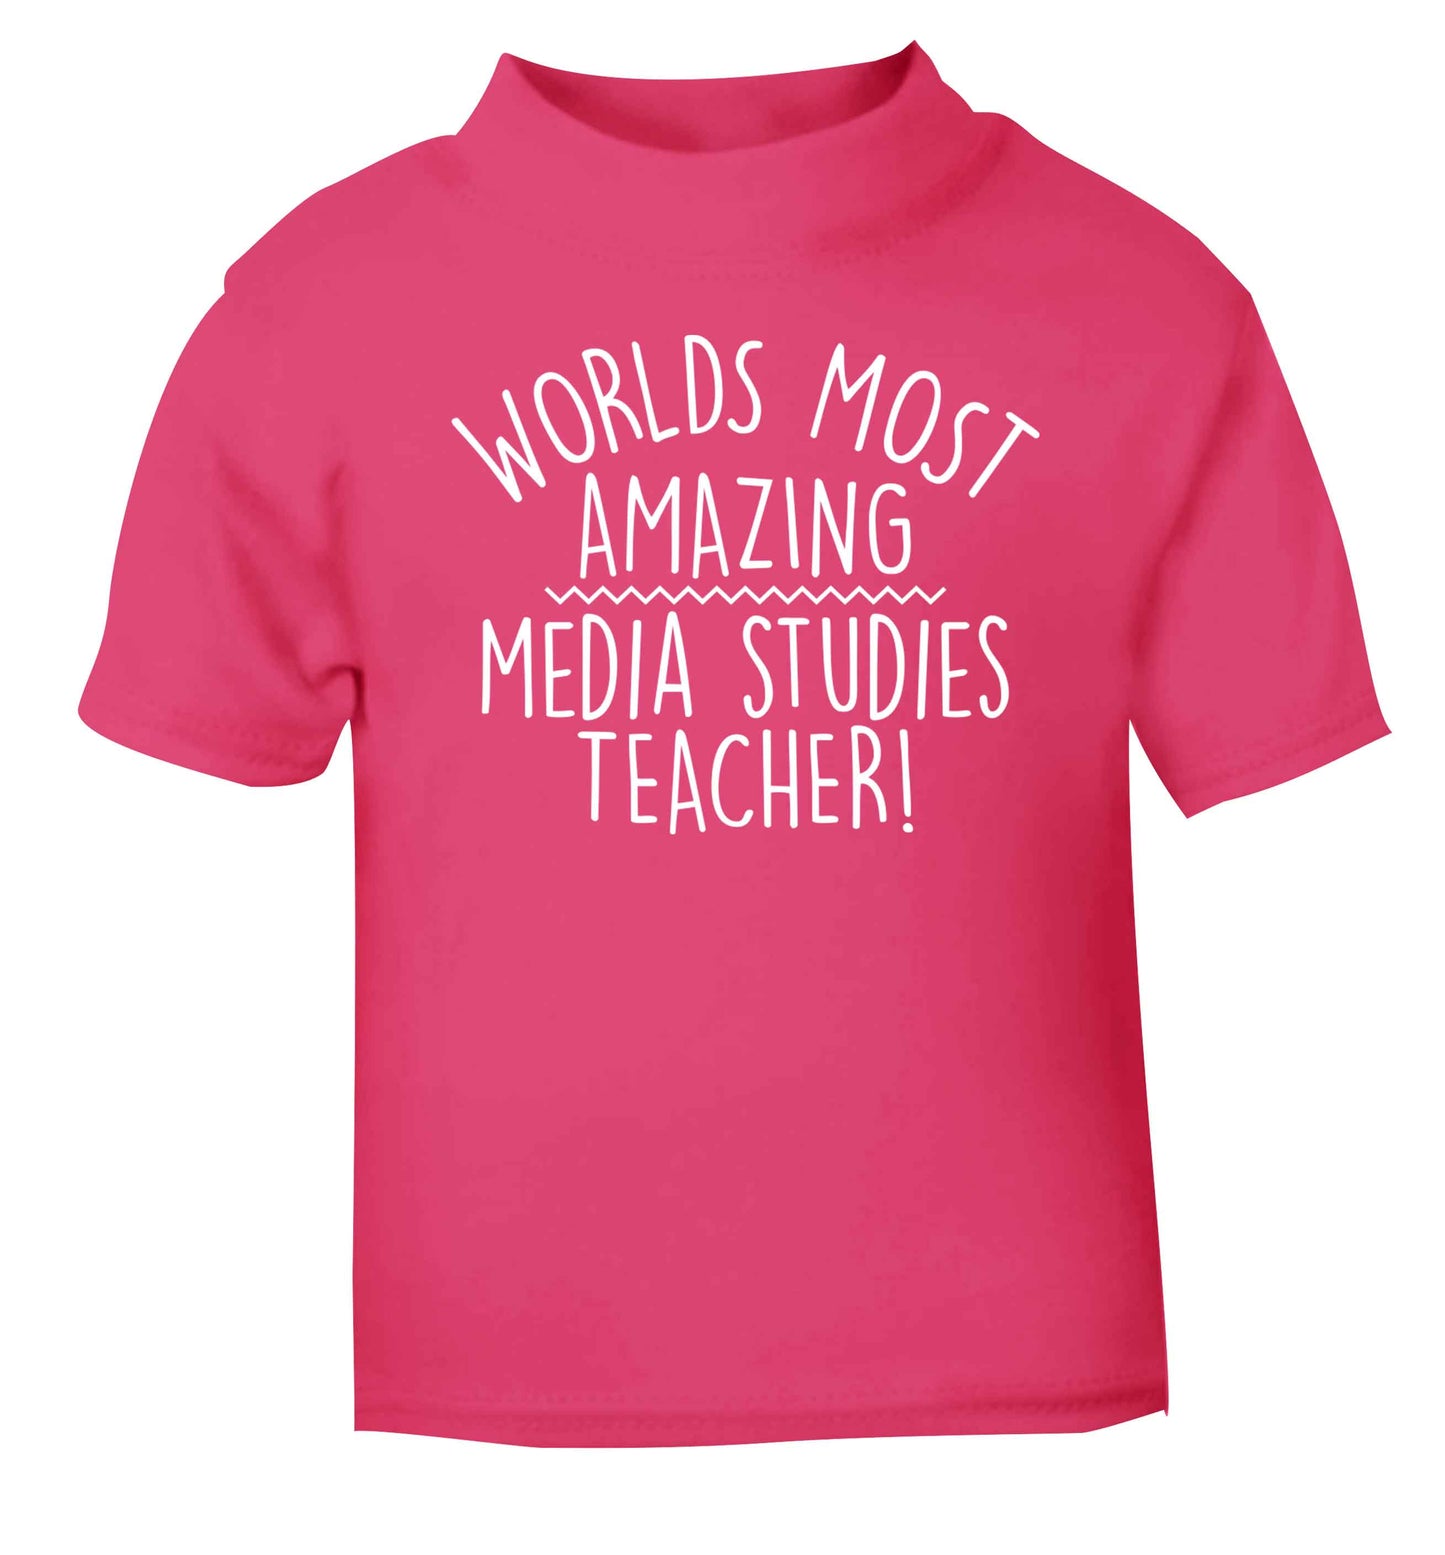 Worlds most amazing media studies teacher pink baby toddler Tshirt 2 Years